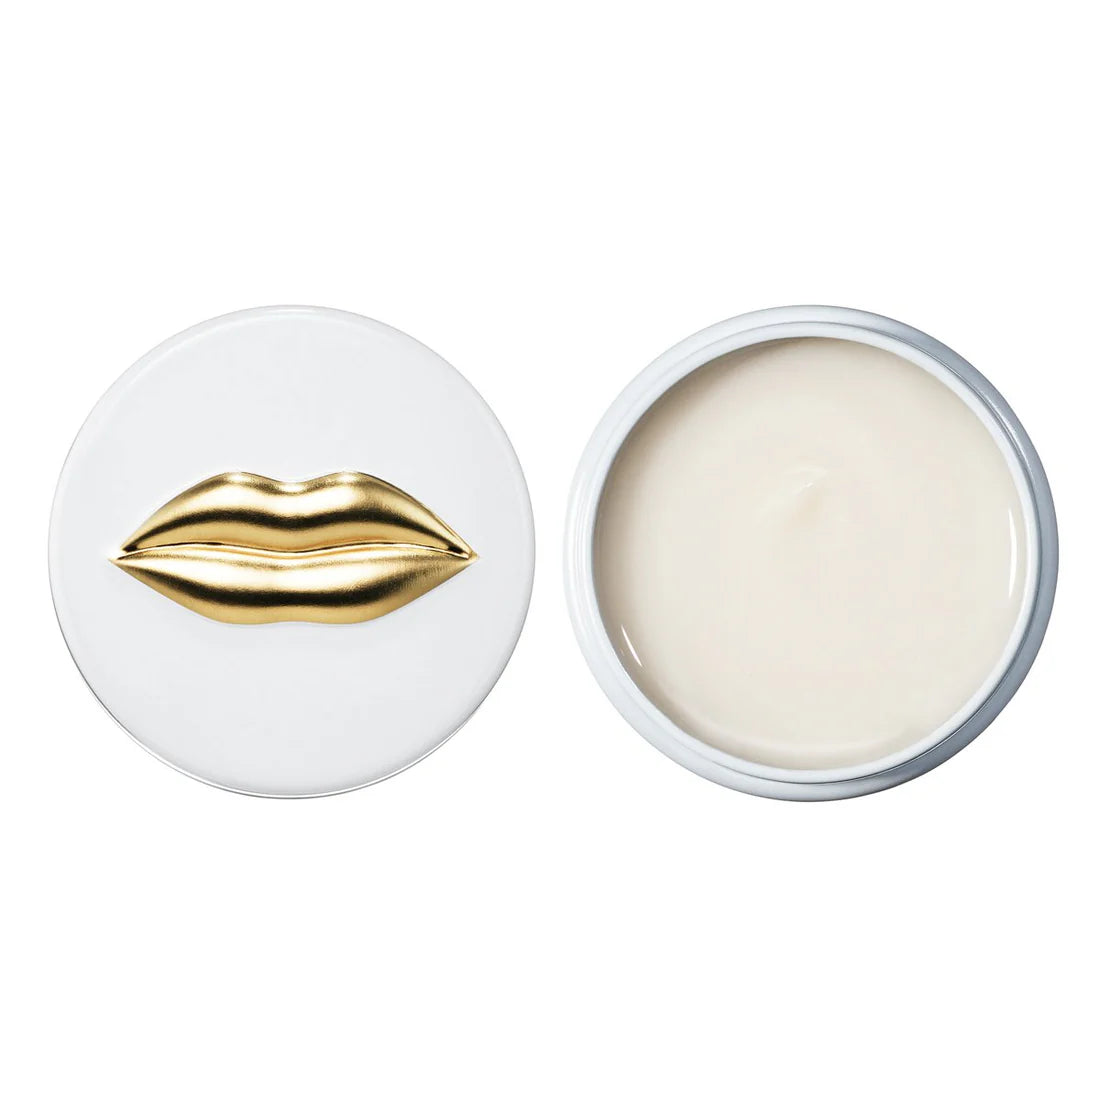 Pat McGrath Labs Lust Luxe Lip Balm Clear